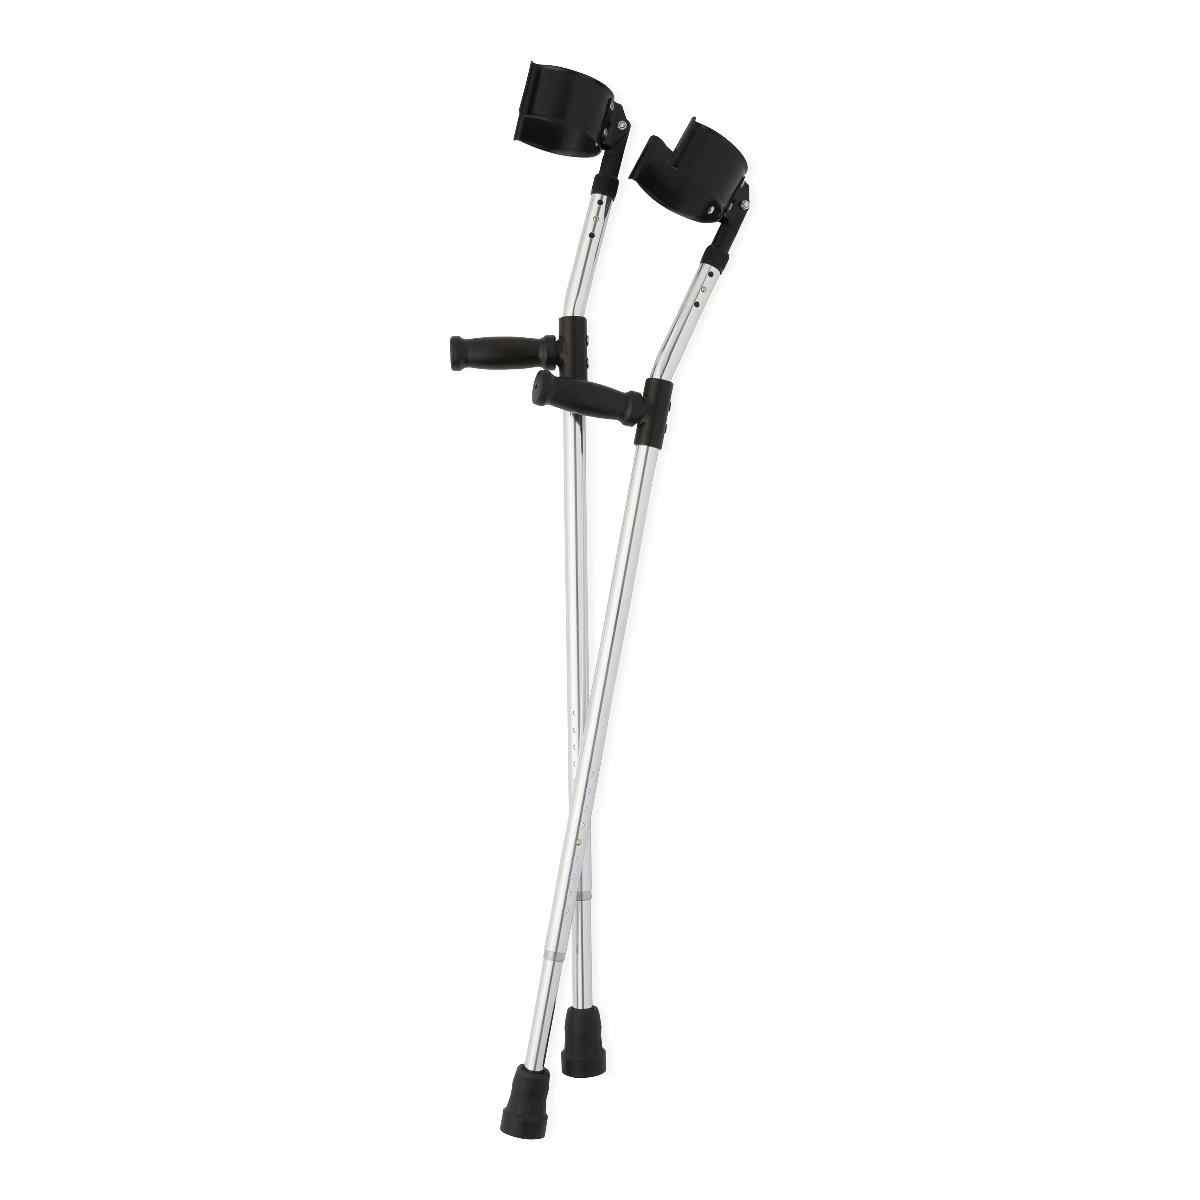 Medline Guardian Aluminum Forearm Crutches, G05160, Tall Adult (5'10"- 6'6") - 1 Pair 